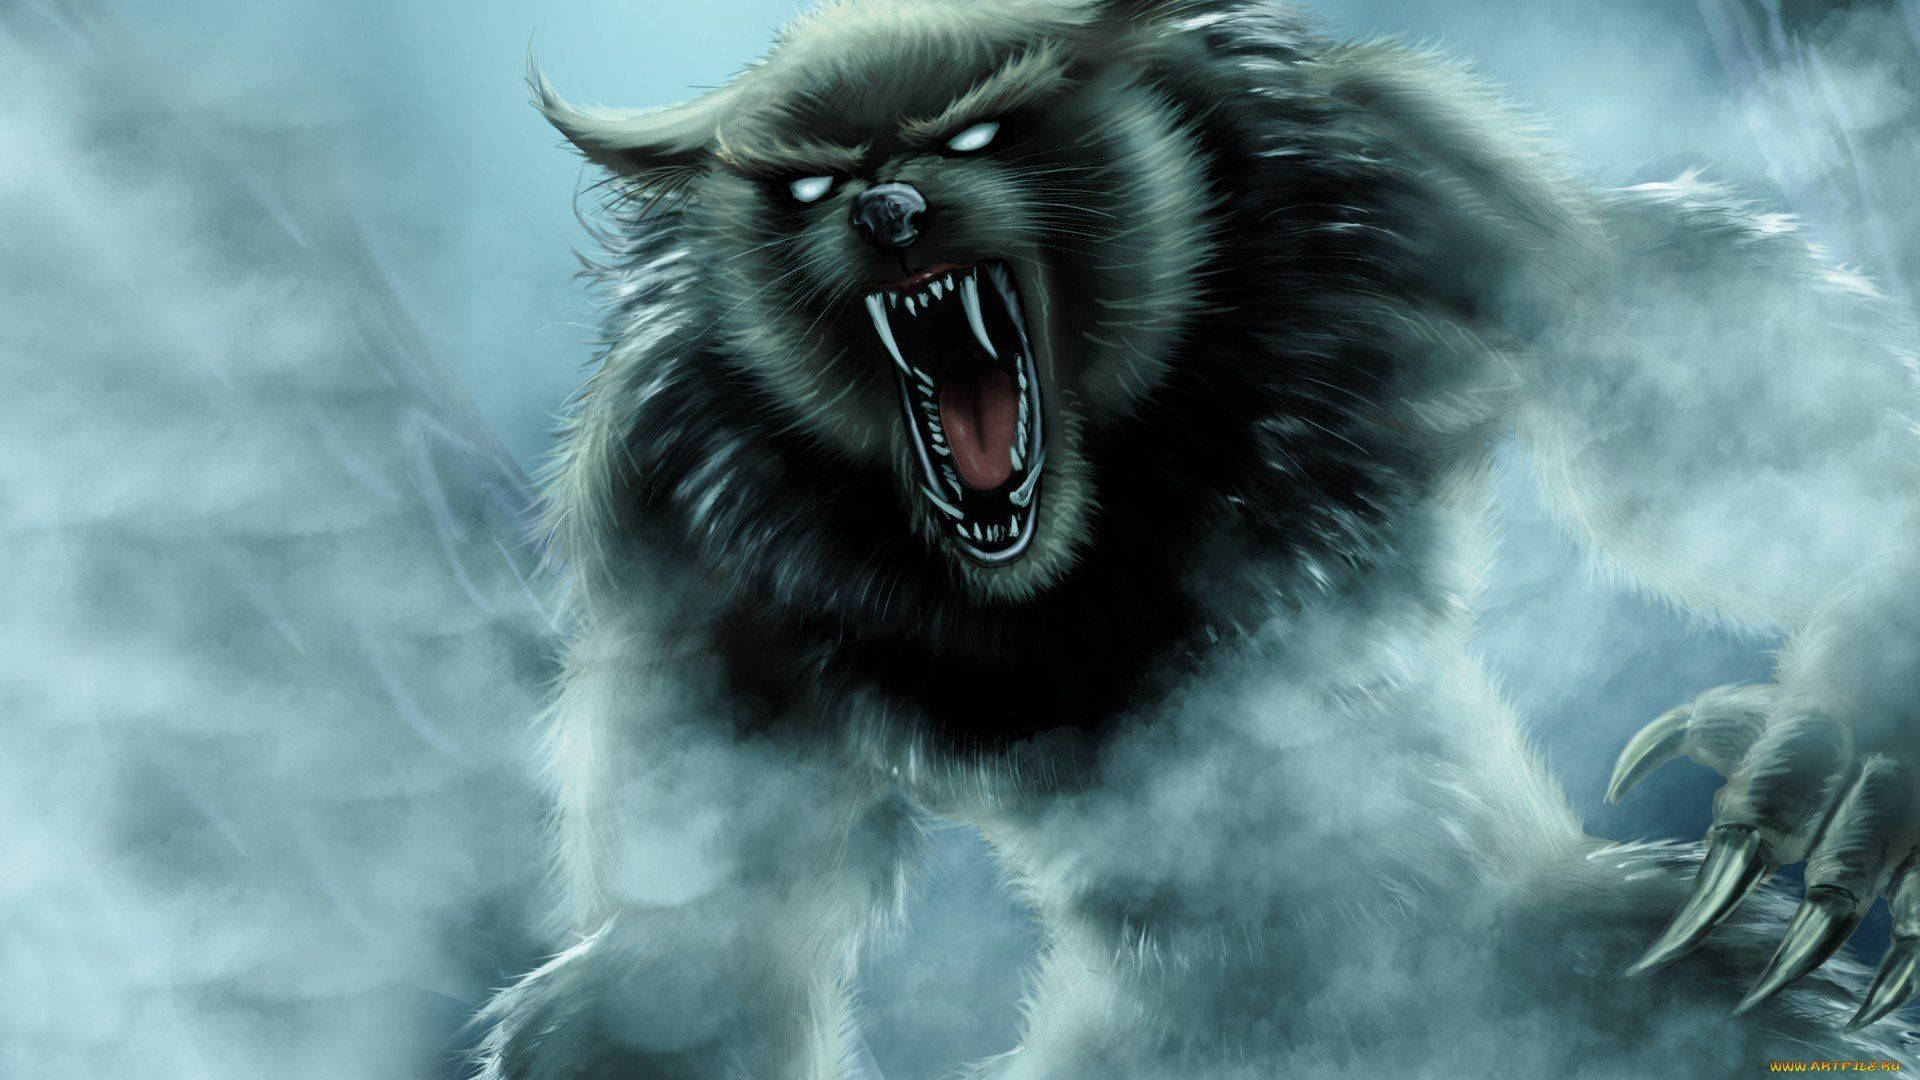 Werewolf 1920X1080 Wallpaper and Background Image